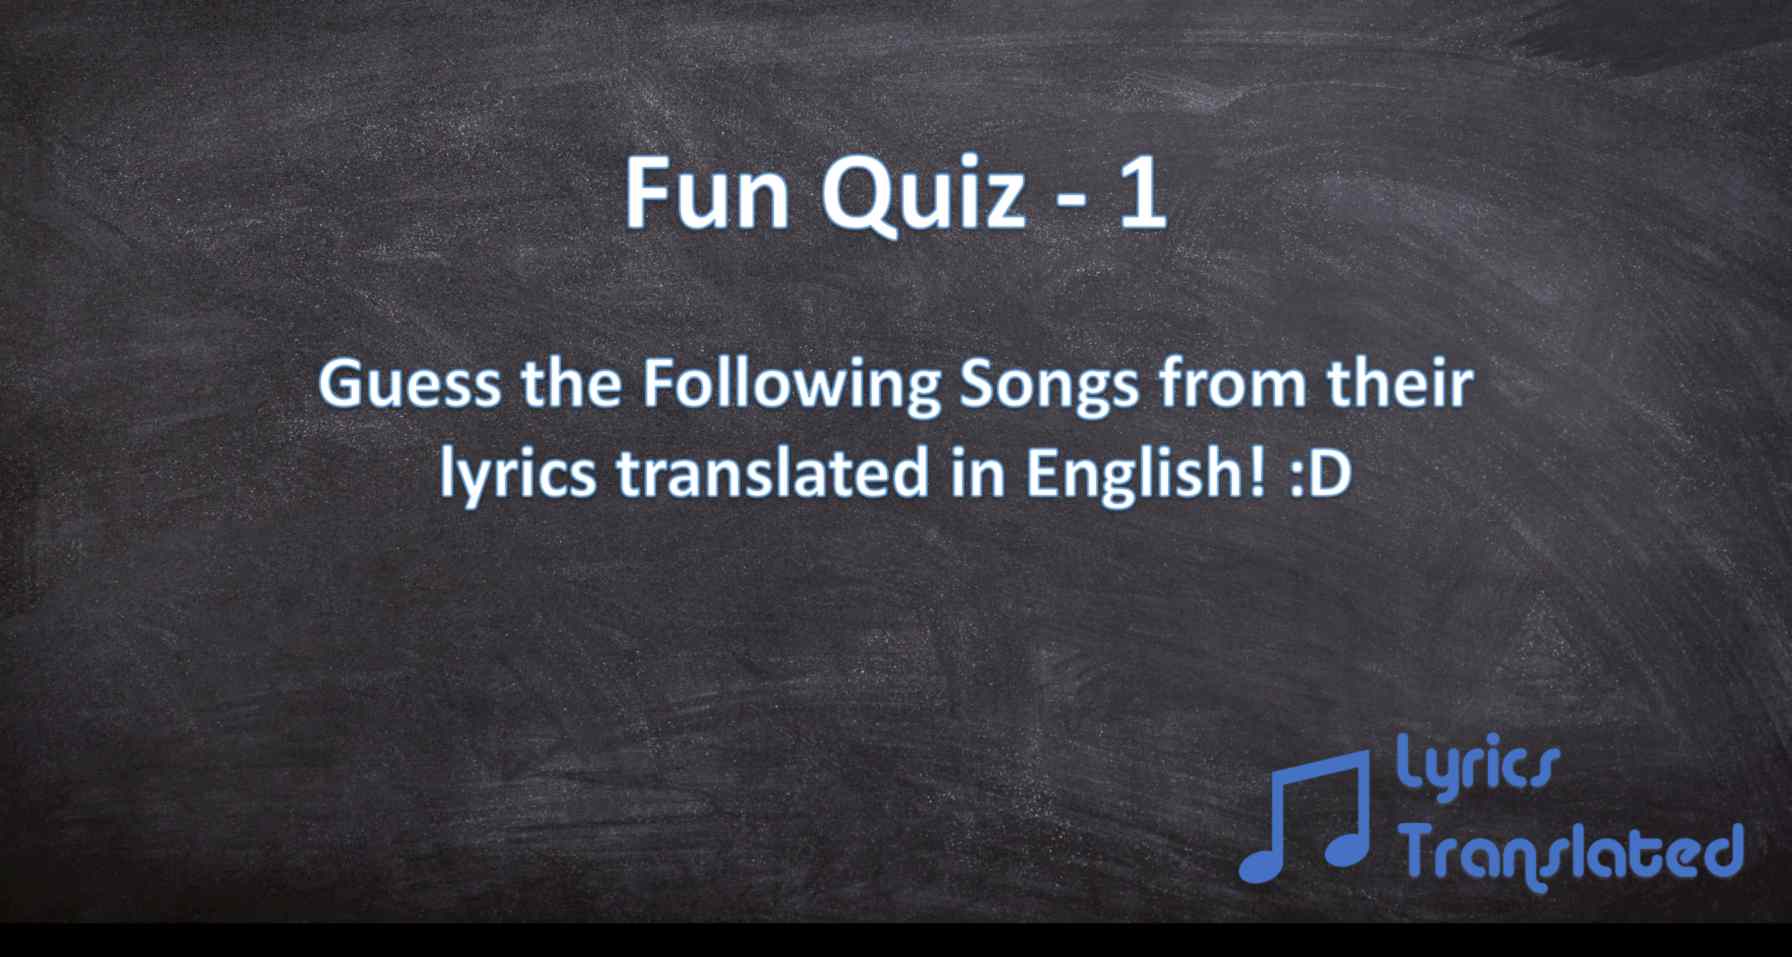 Fun Quiz 1 Lyrics Translated